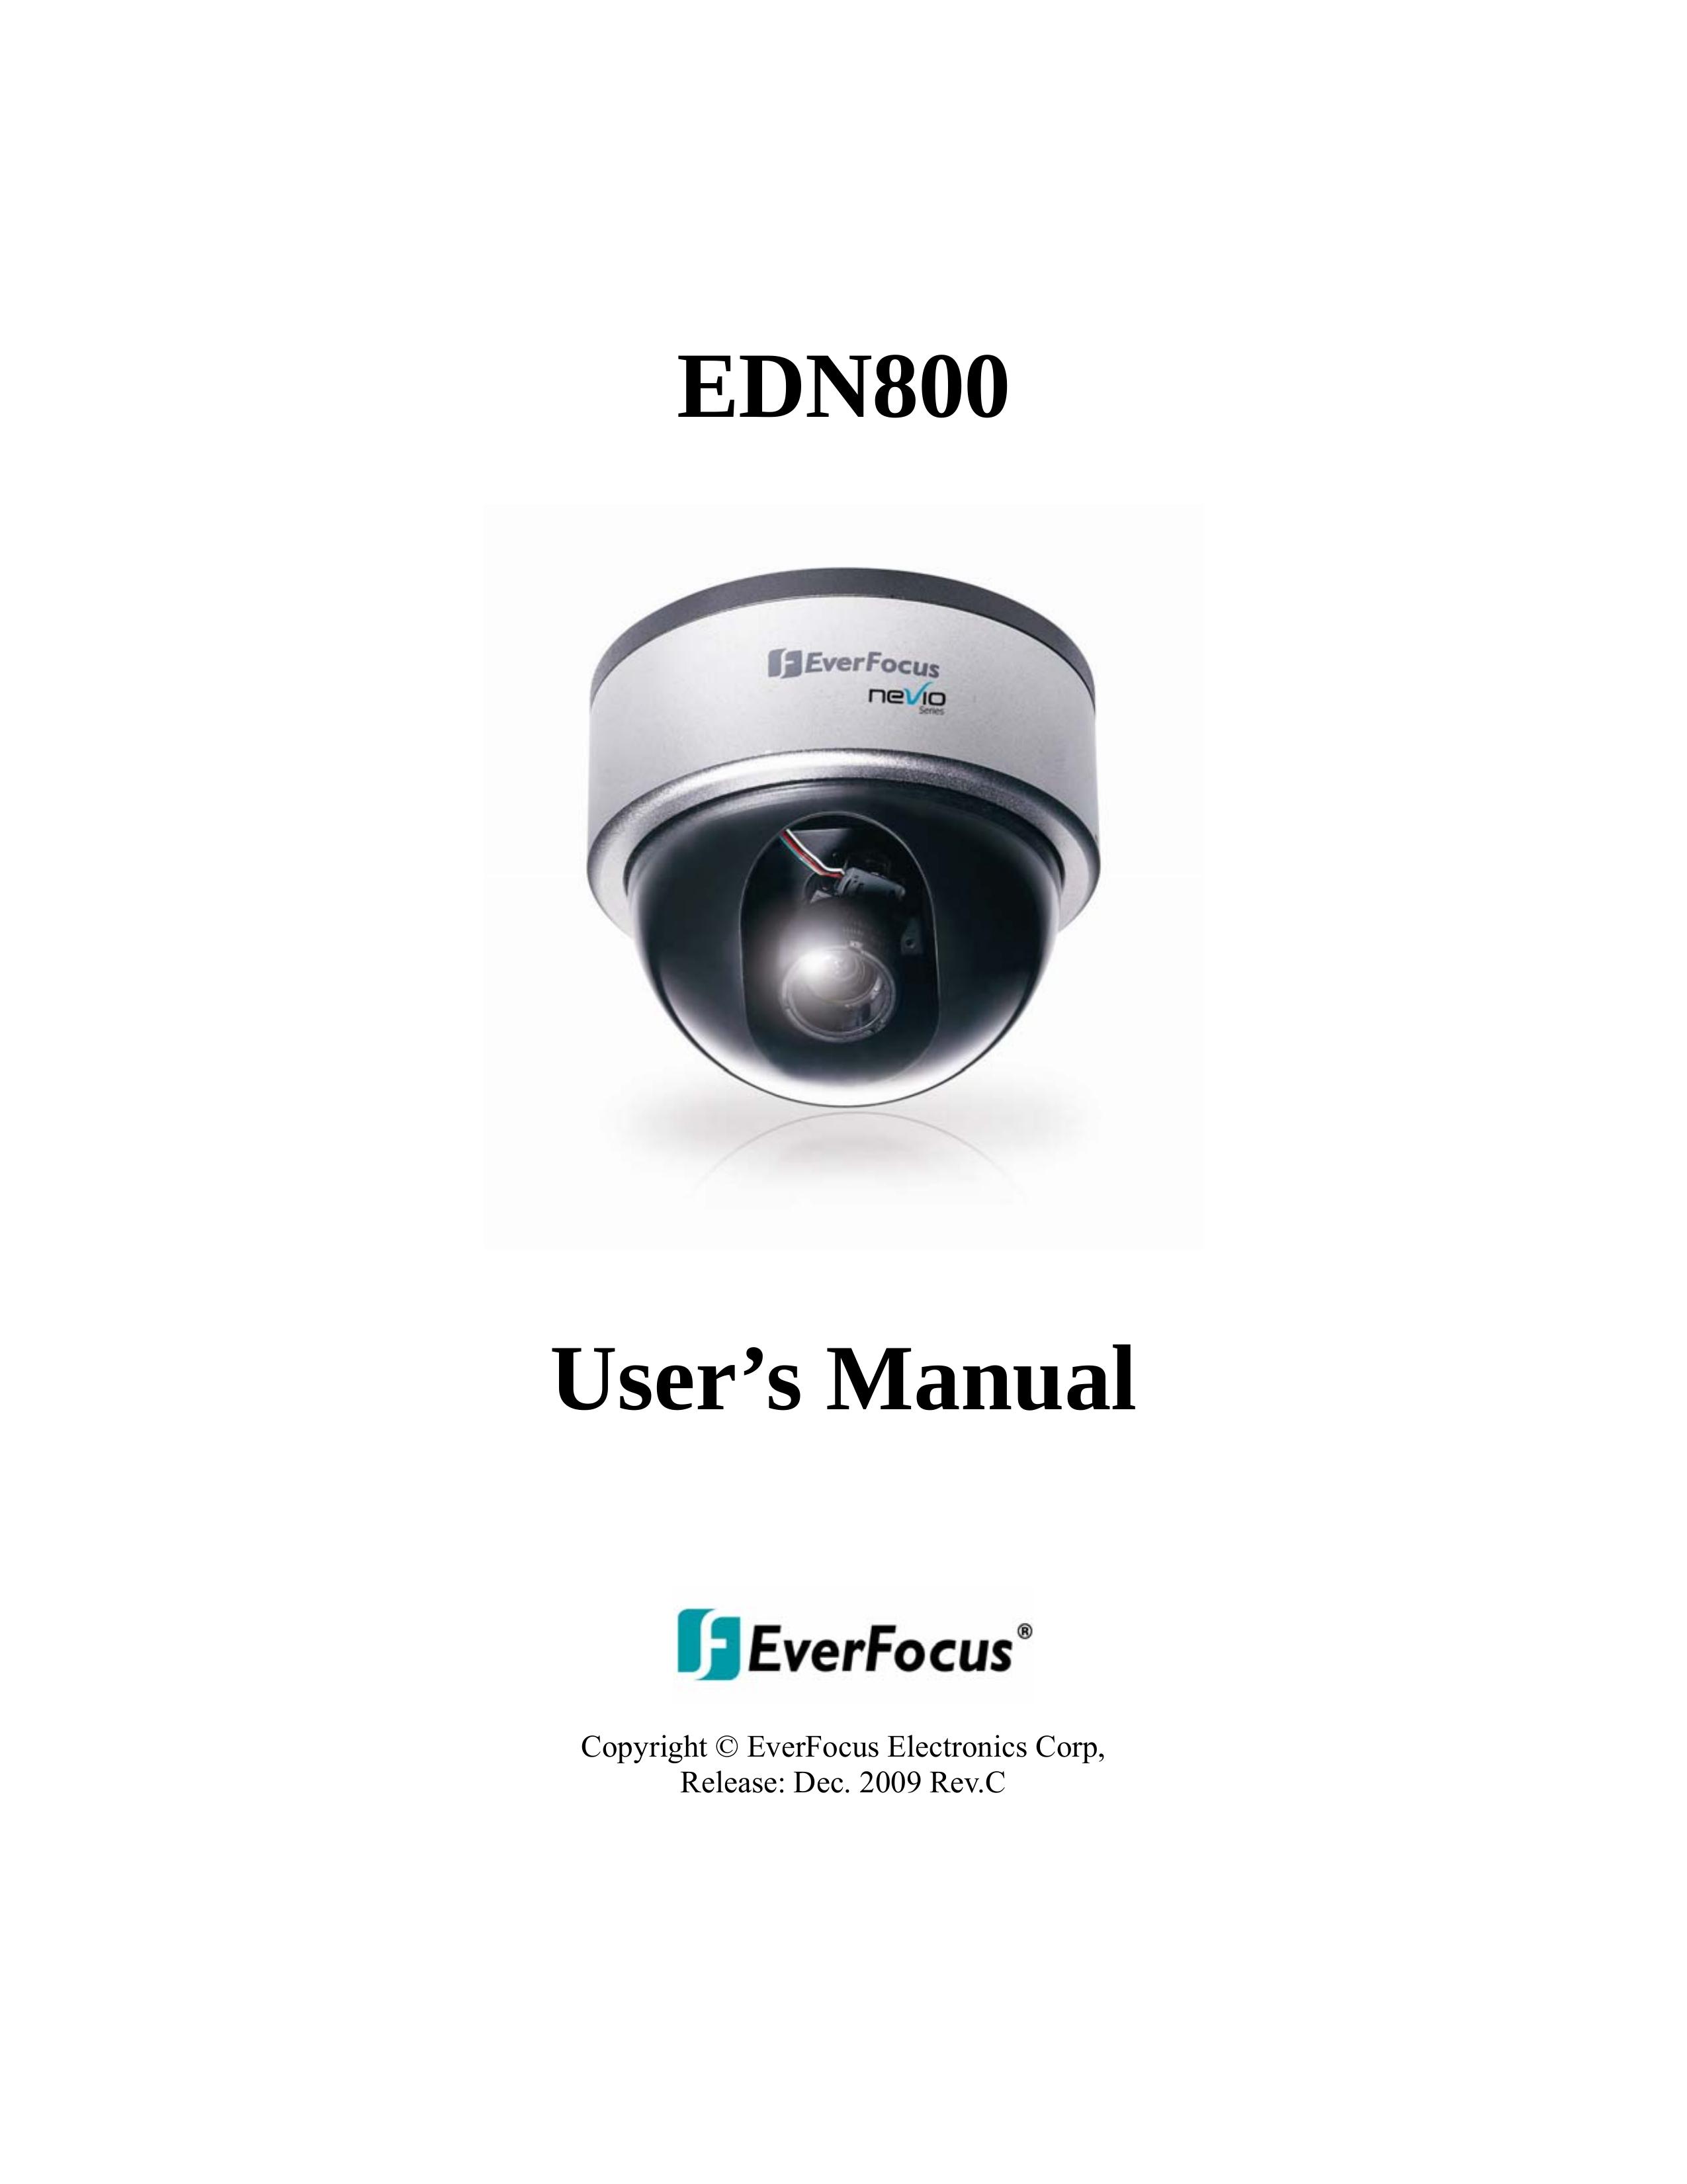 EverFocus EDN800 Security Camera User Manual